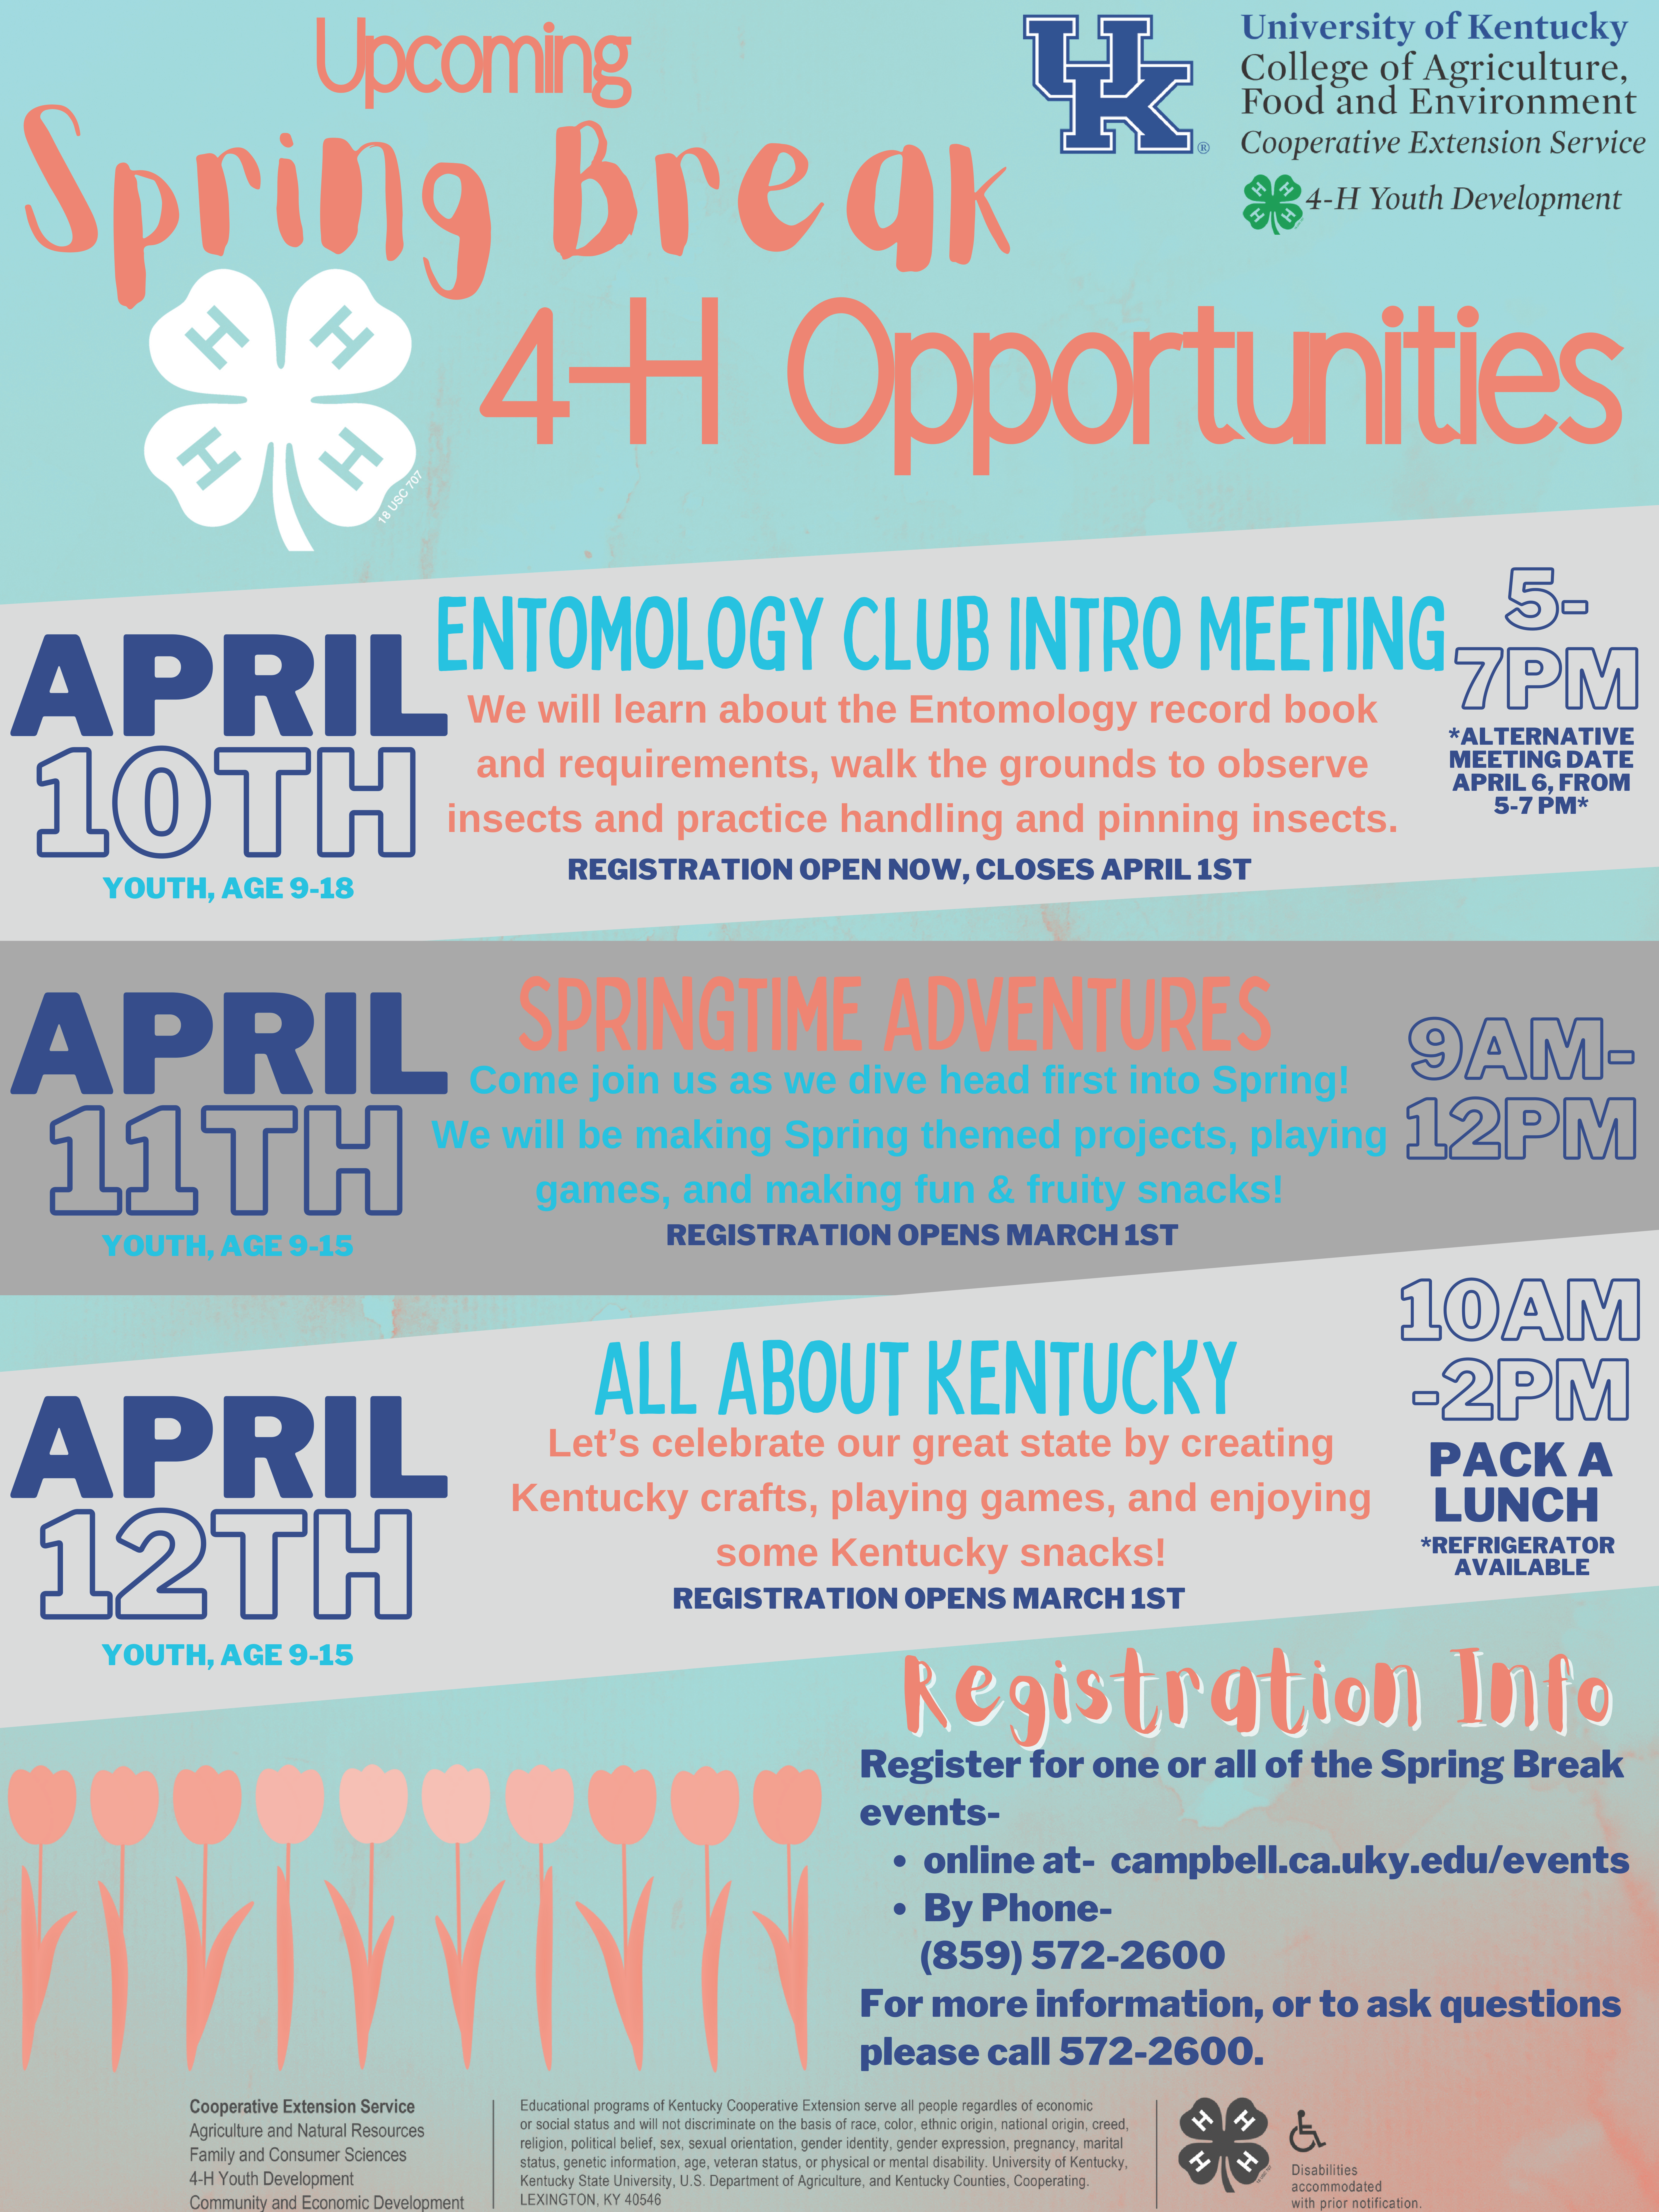 Upcoming Spring Break 4-H Opportunities. April 10 Entomology Club. April 11 Springtime Adventures. April 12 All About Kentucky.